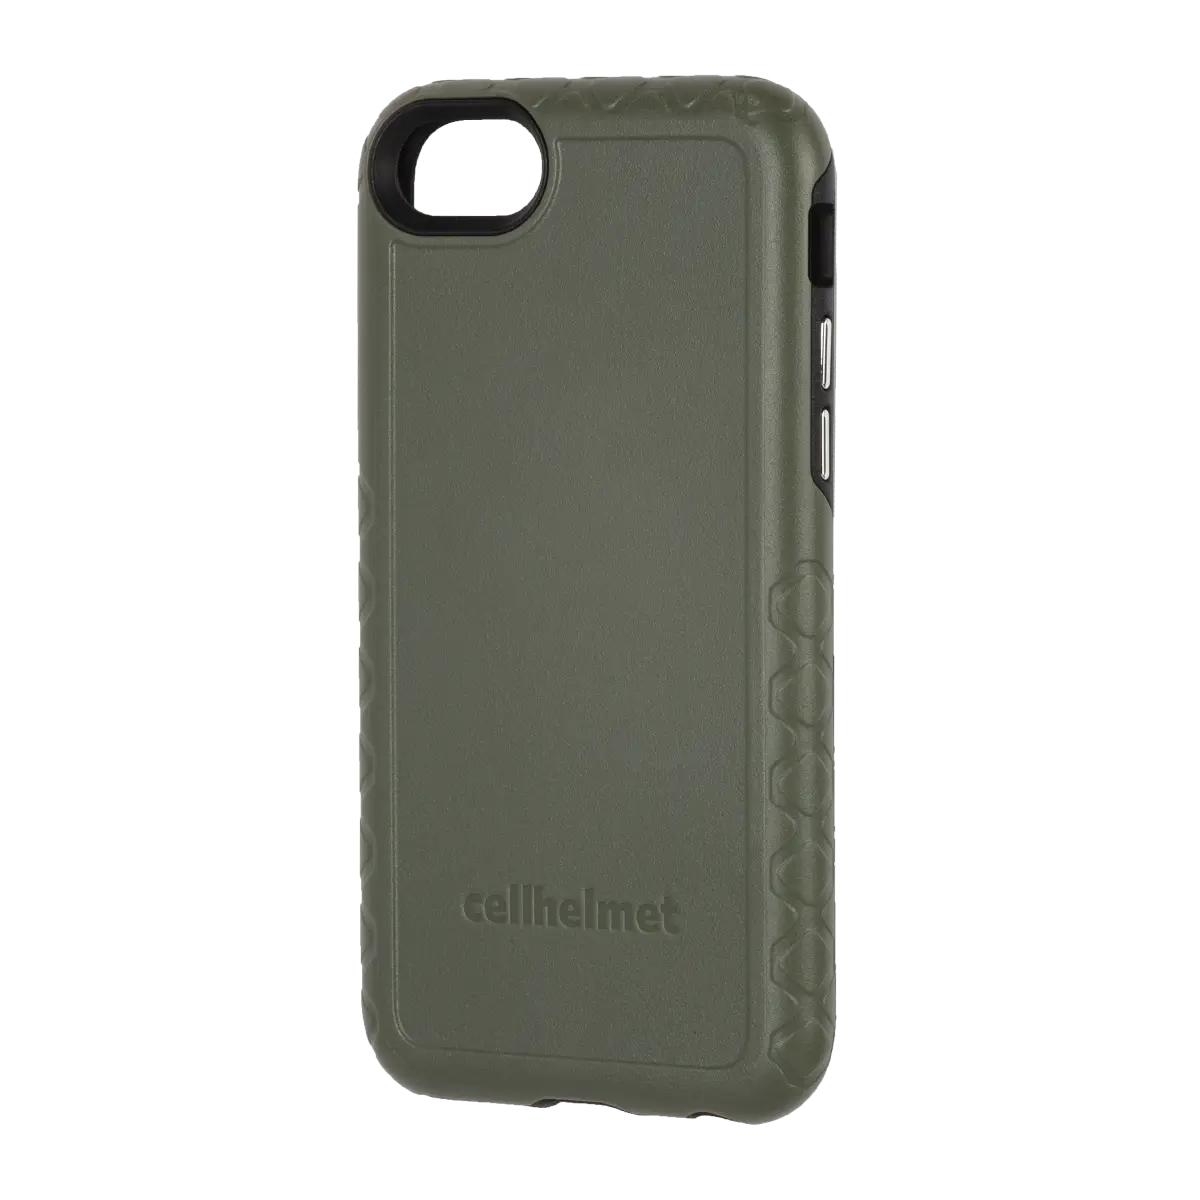 Olive Green cellhelmet Custom Printed Case for iPhone SE 2020